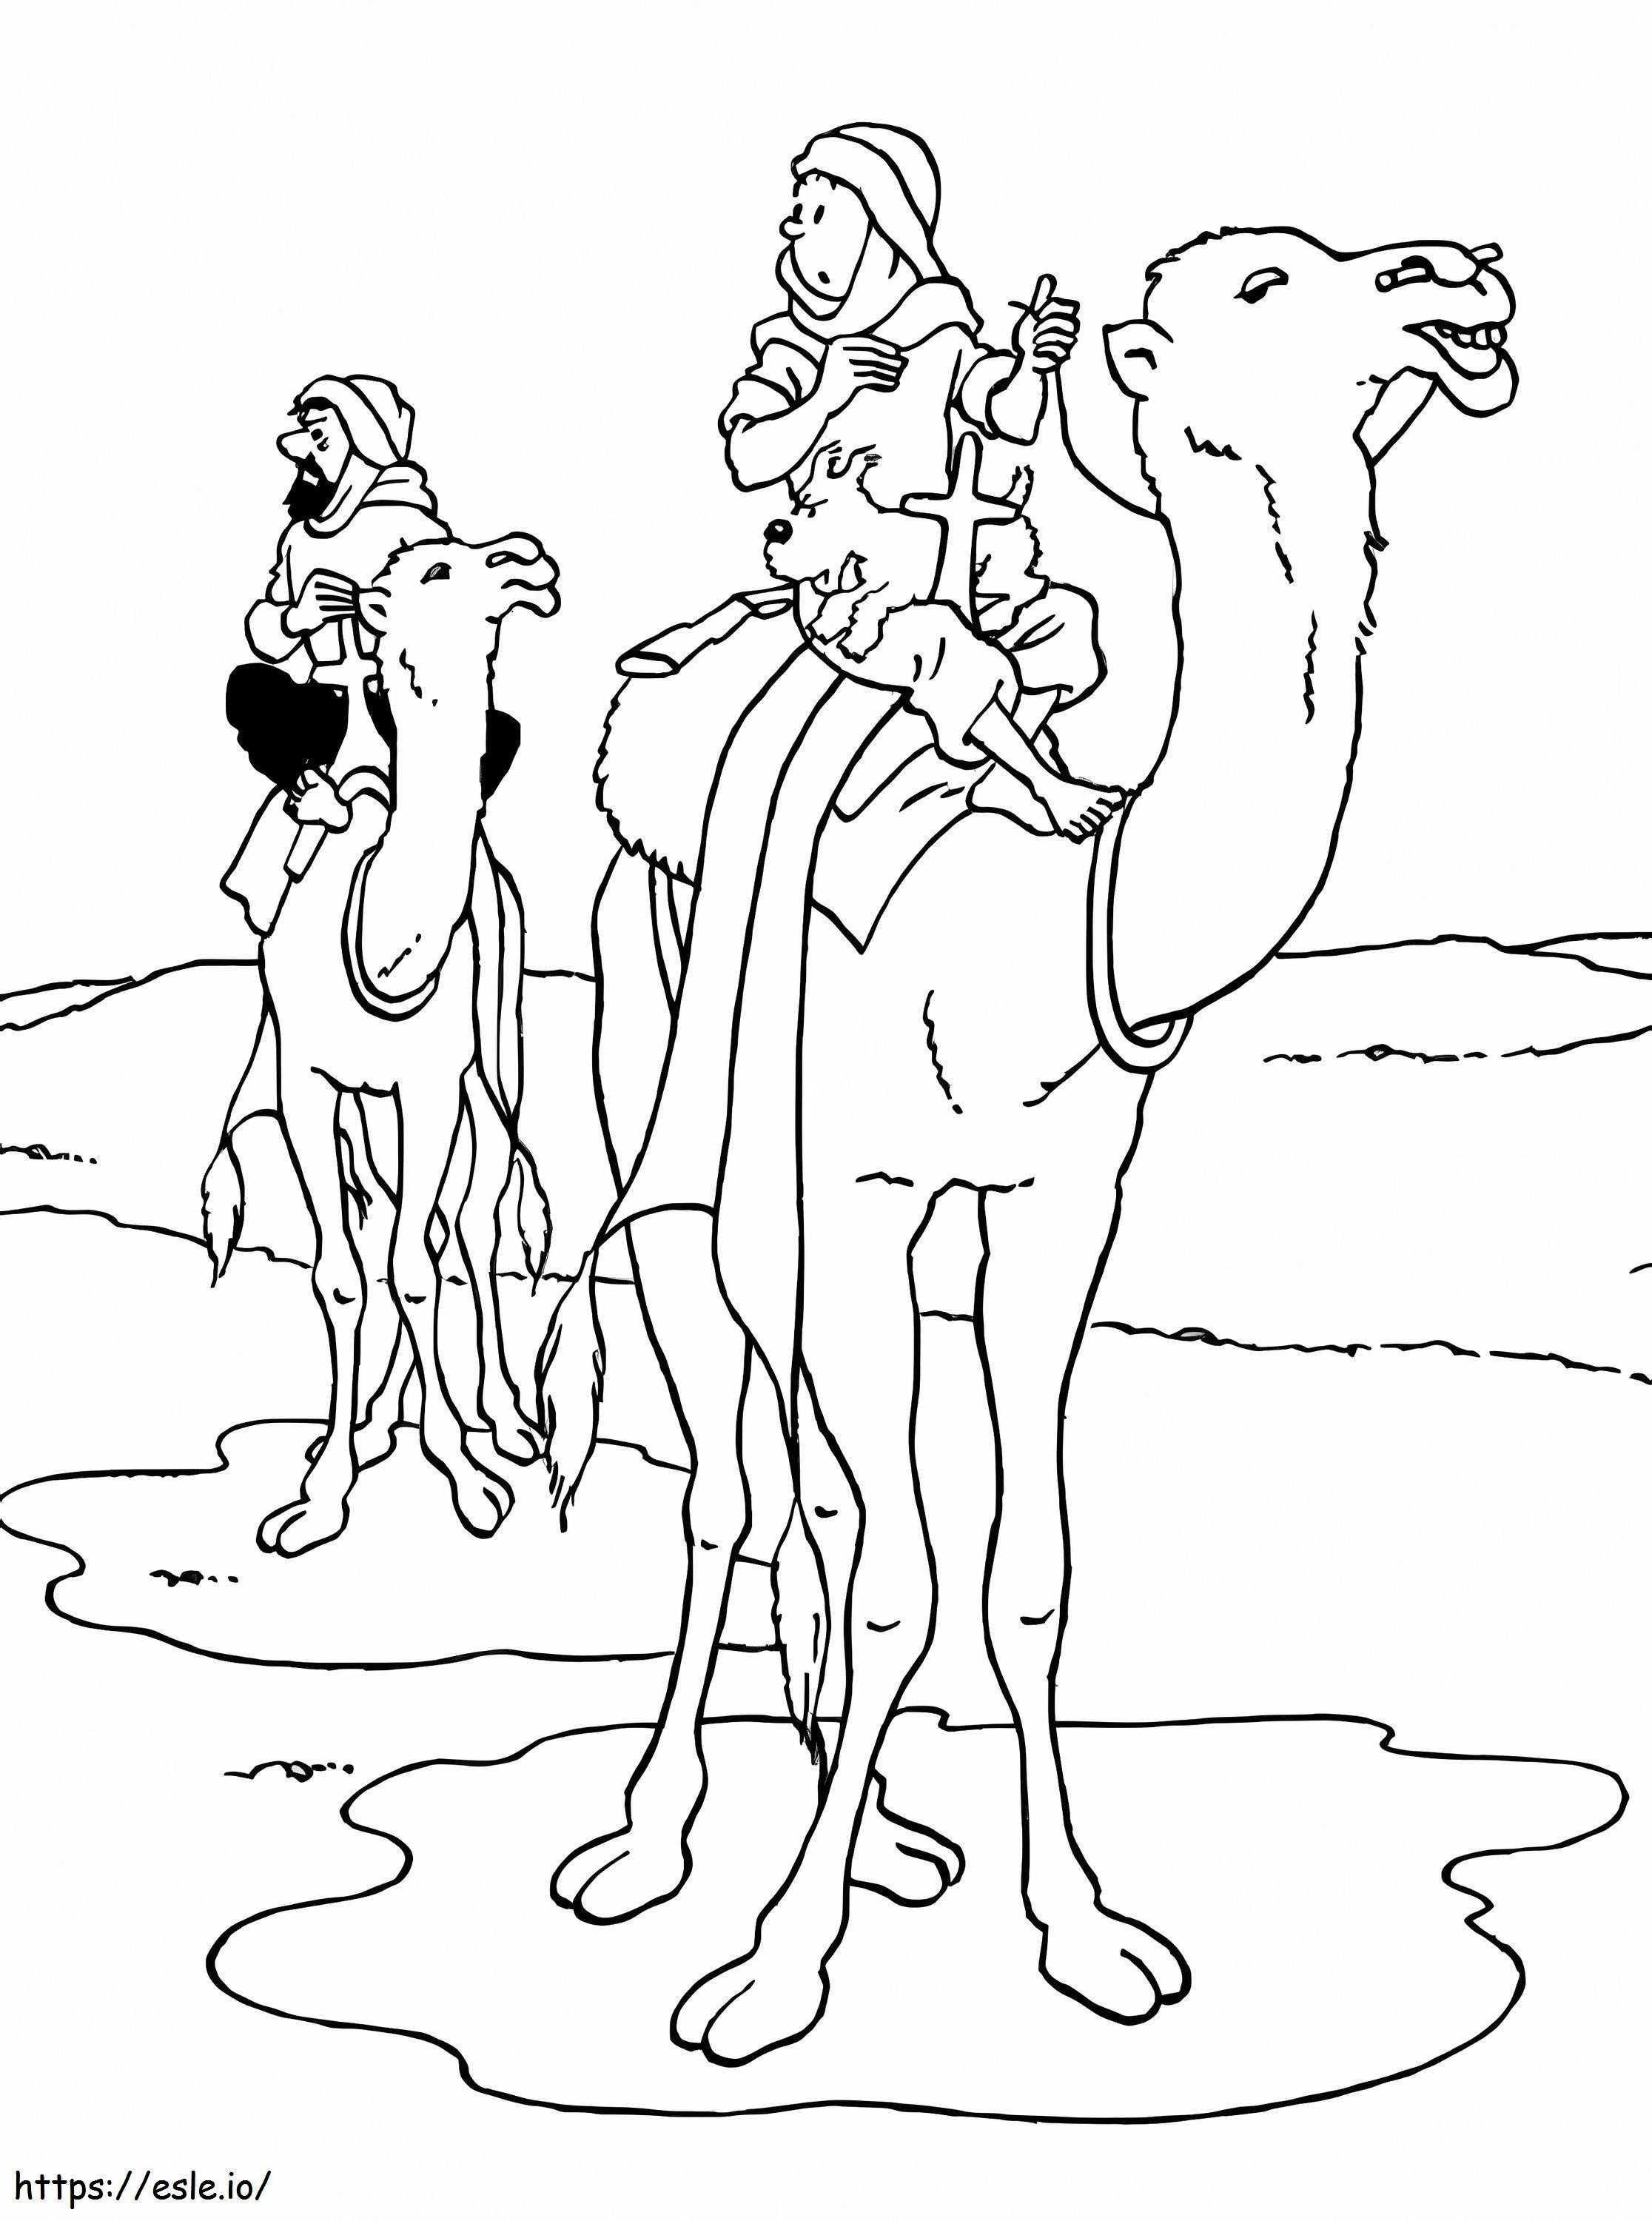 Tintin Riding Camel coloring page